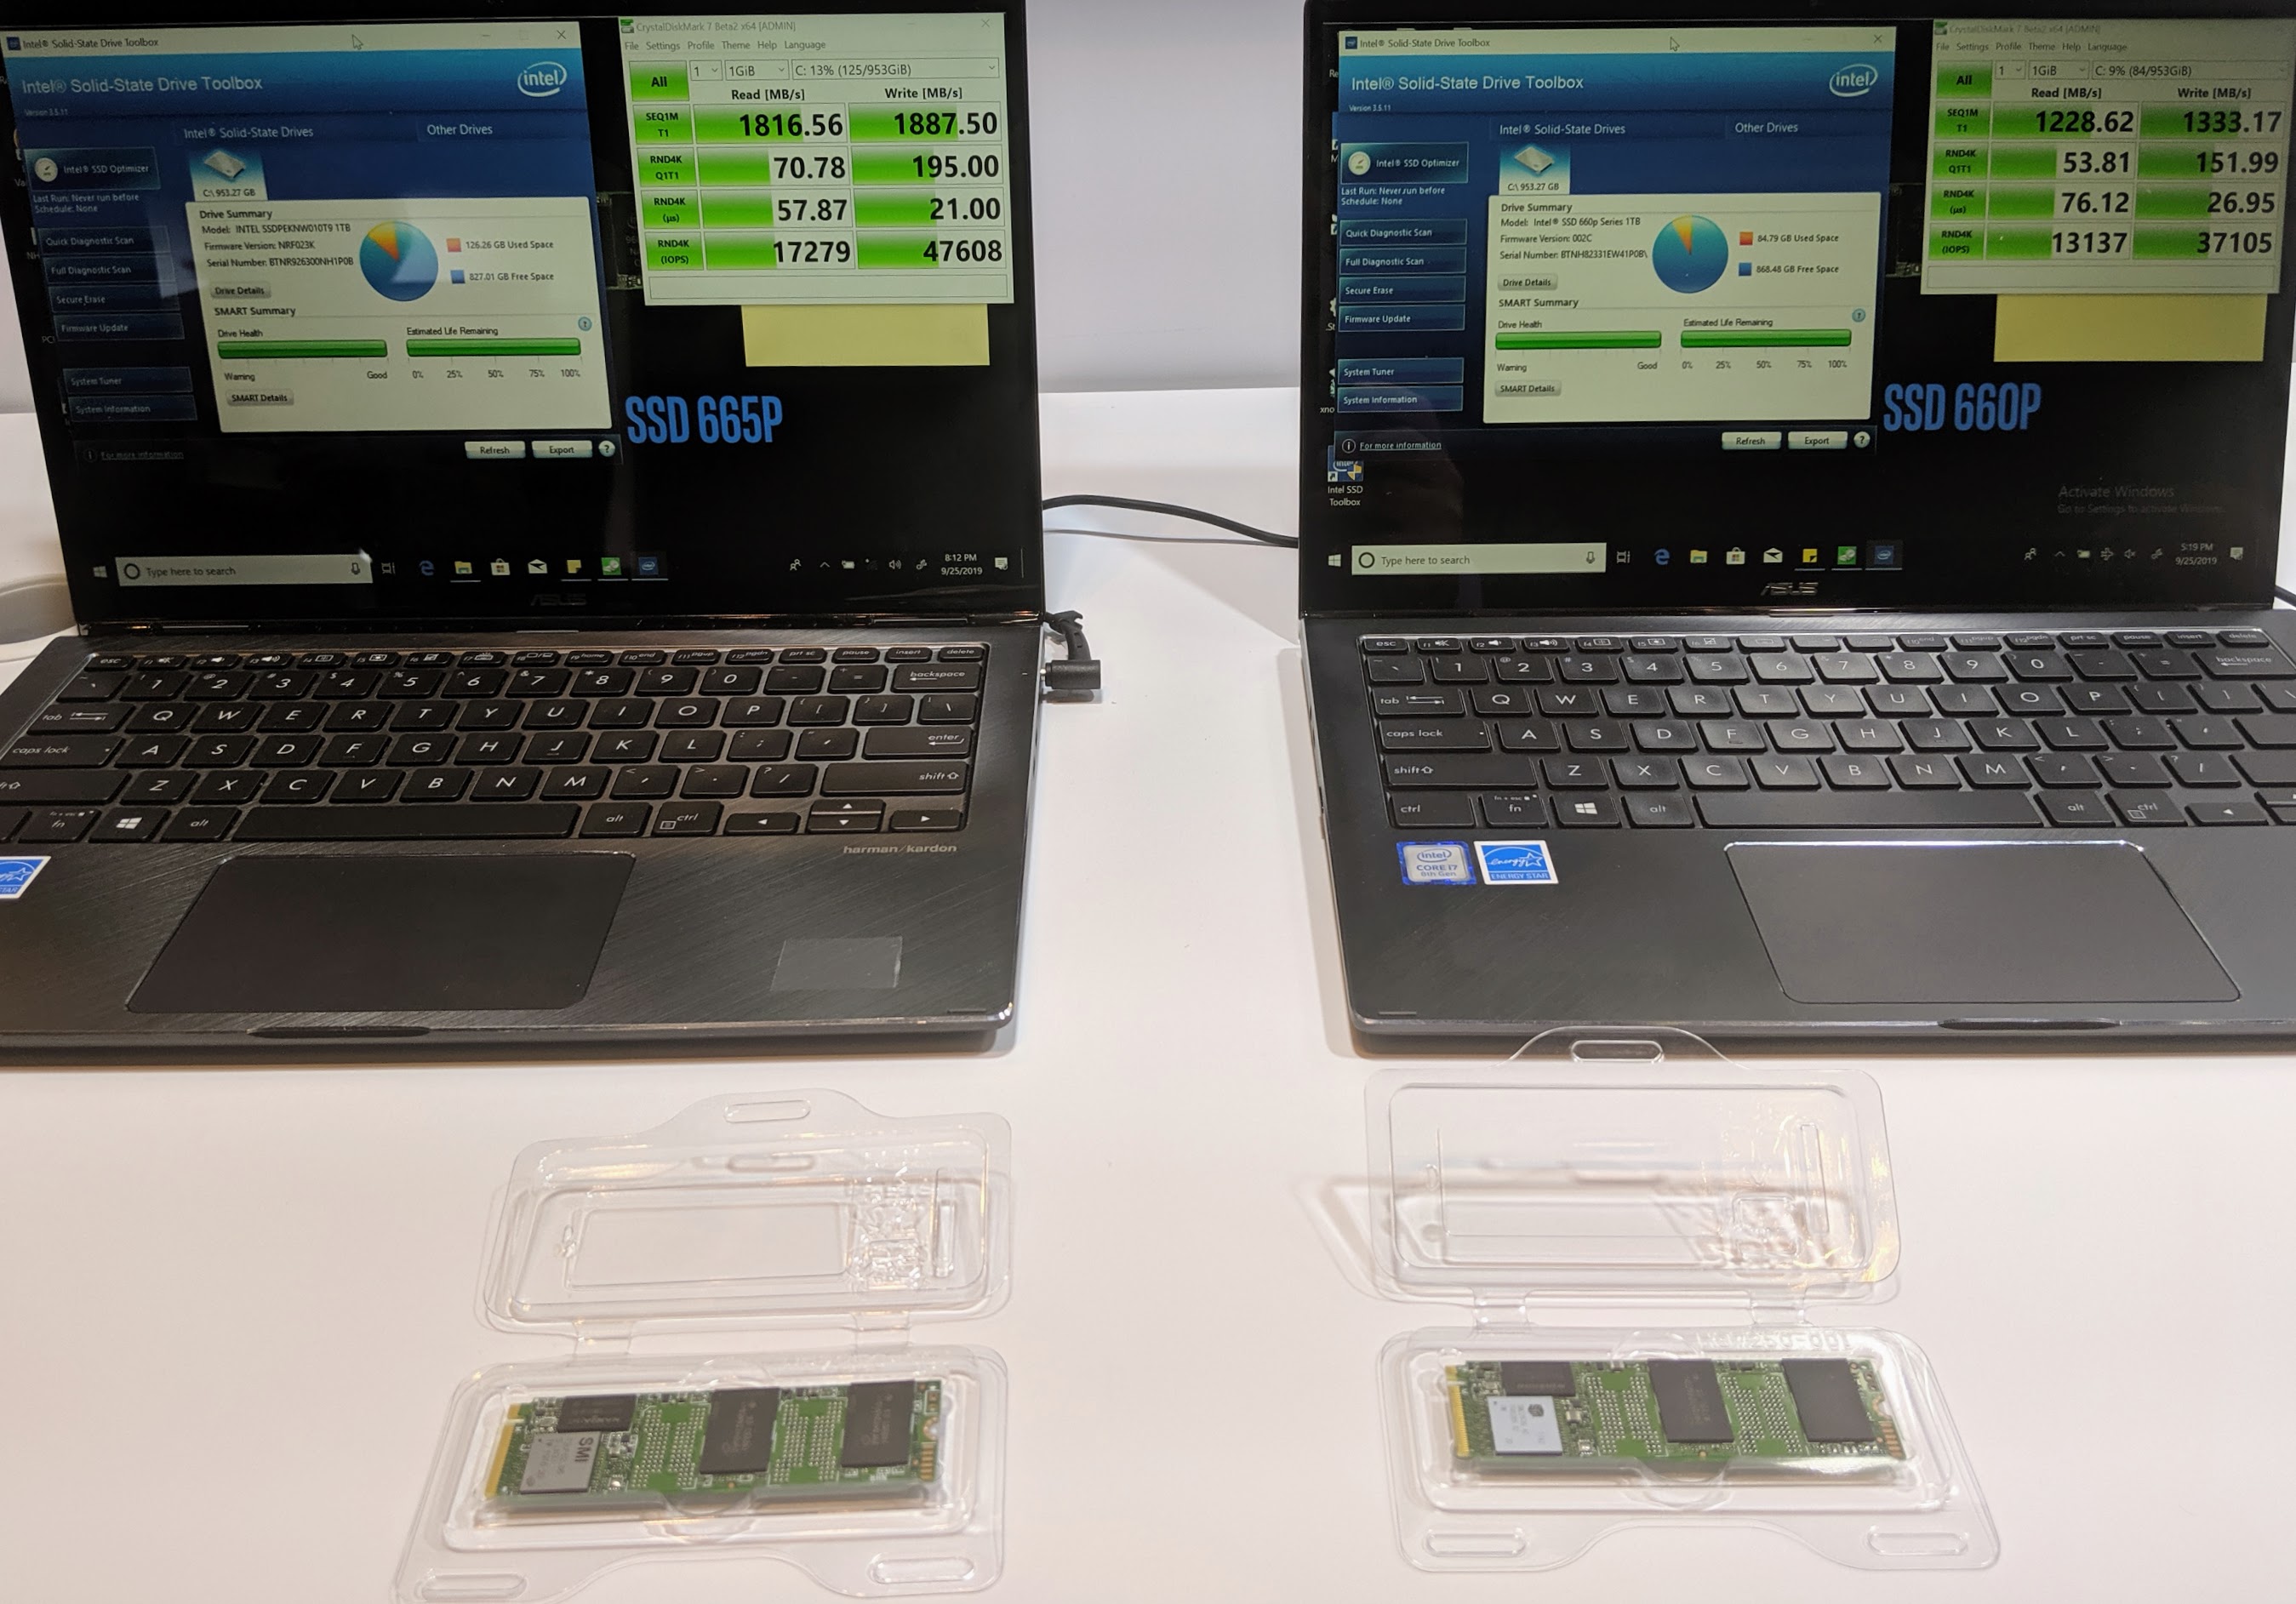 Intel 665p And Intel 660p NVMe SSDs